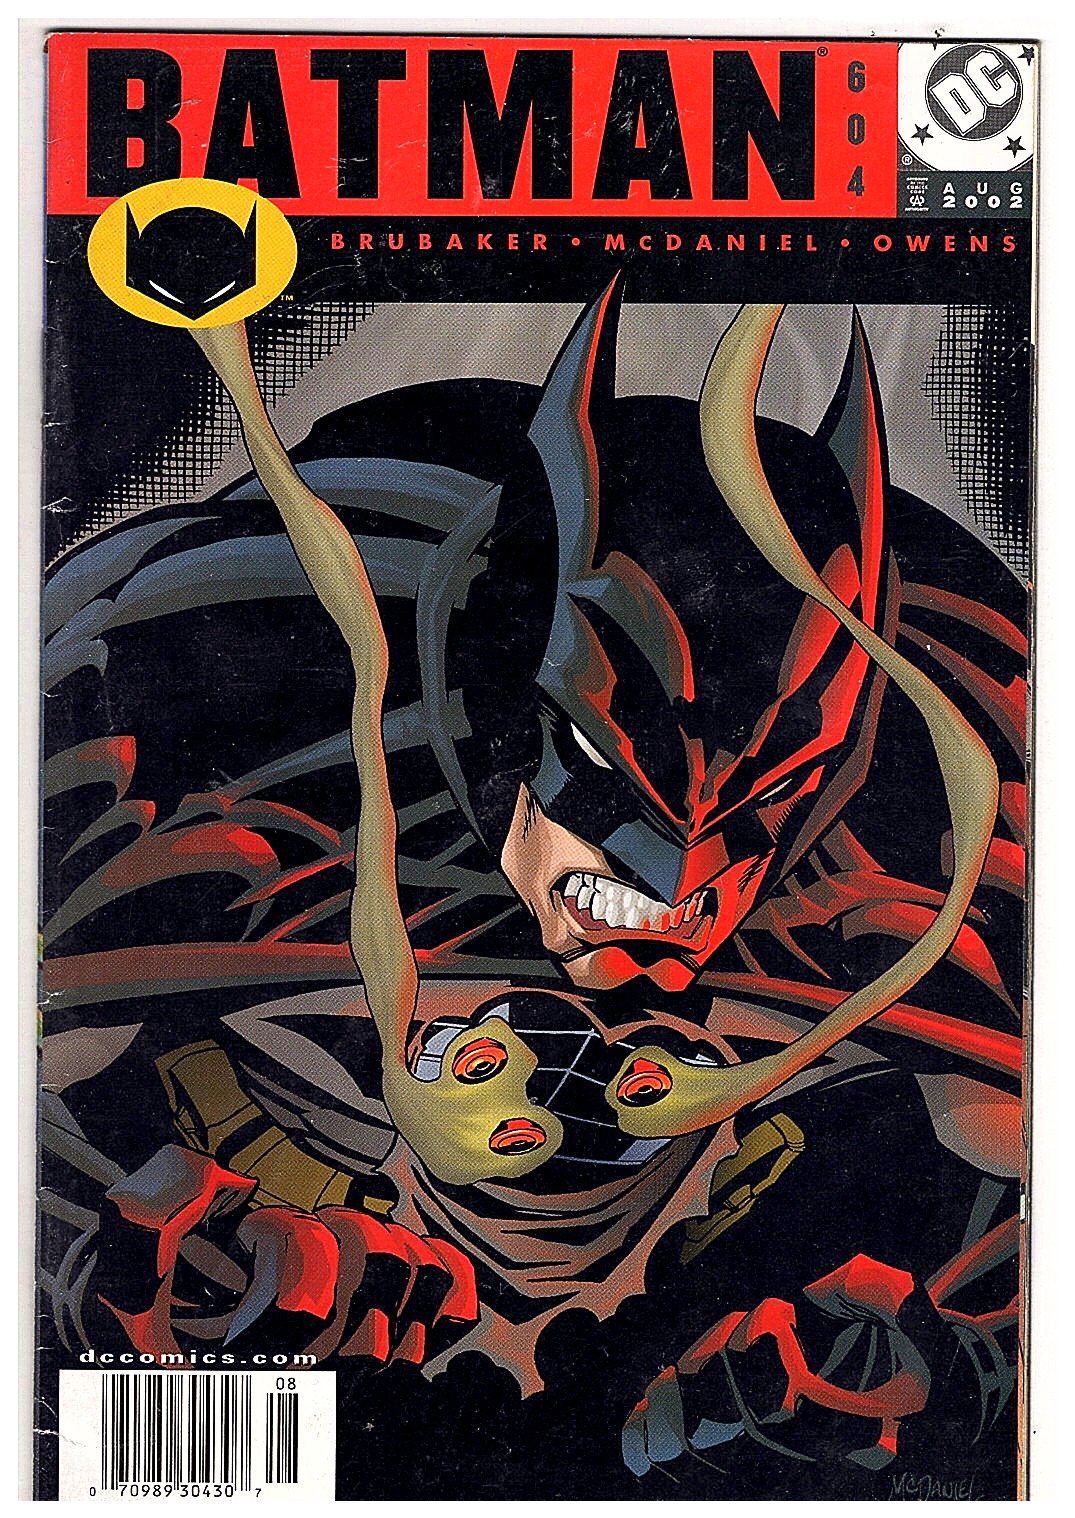 Batman #604